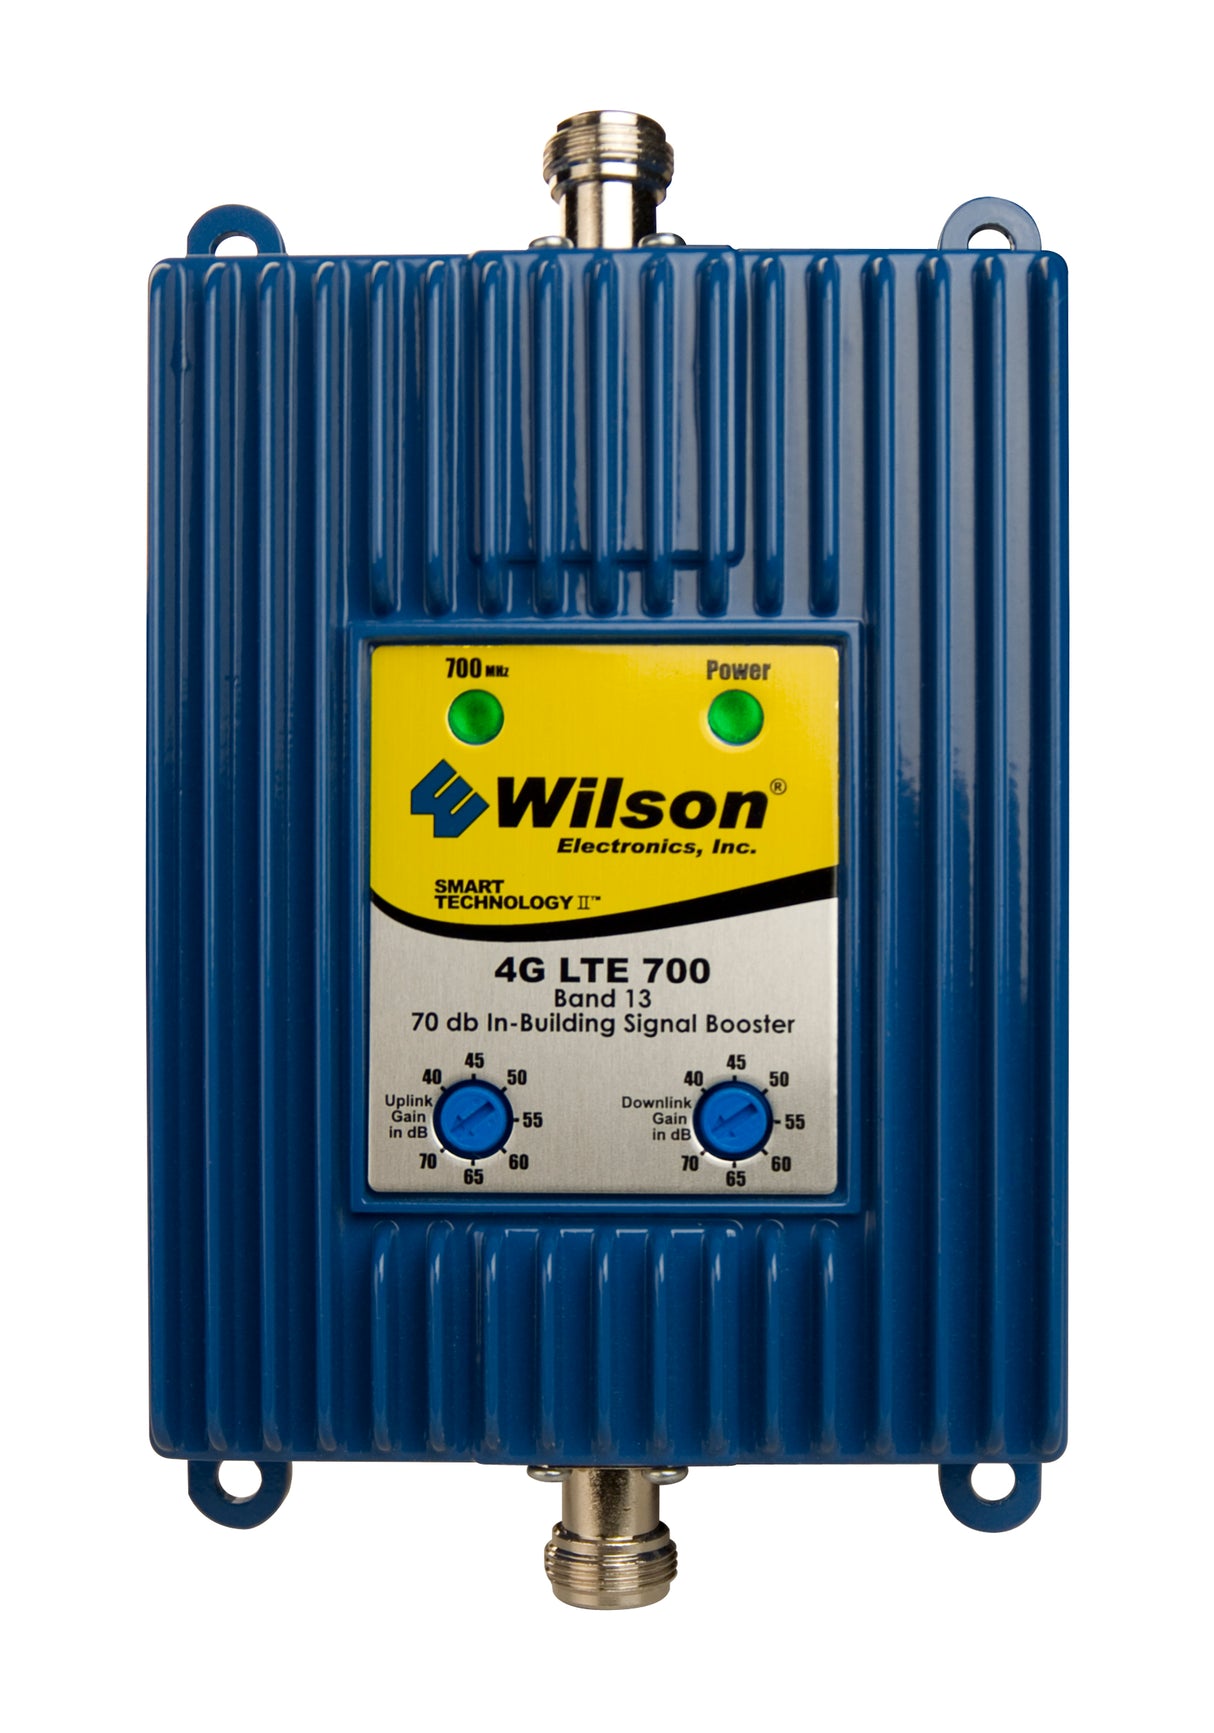 Wilson 801865 70 dB 4G LTE Amplifier for Verizon Wireless [Discontinued]